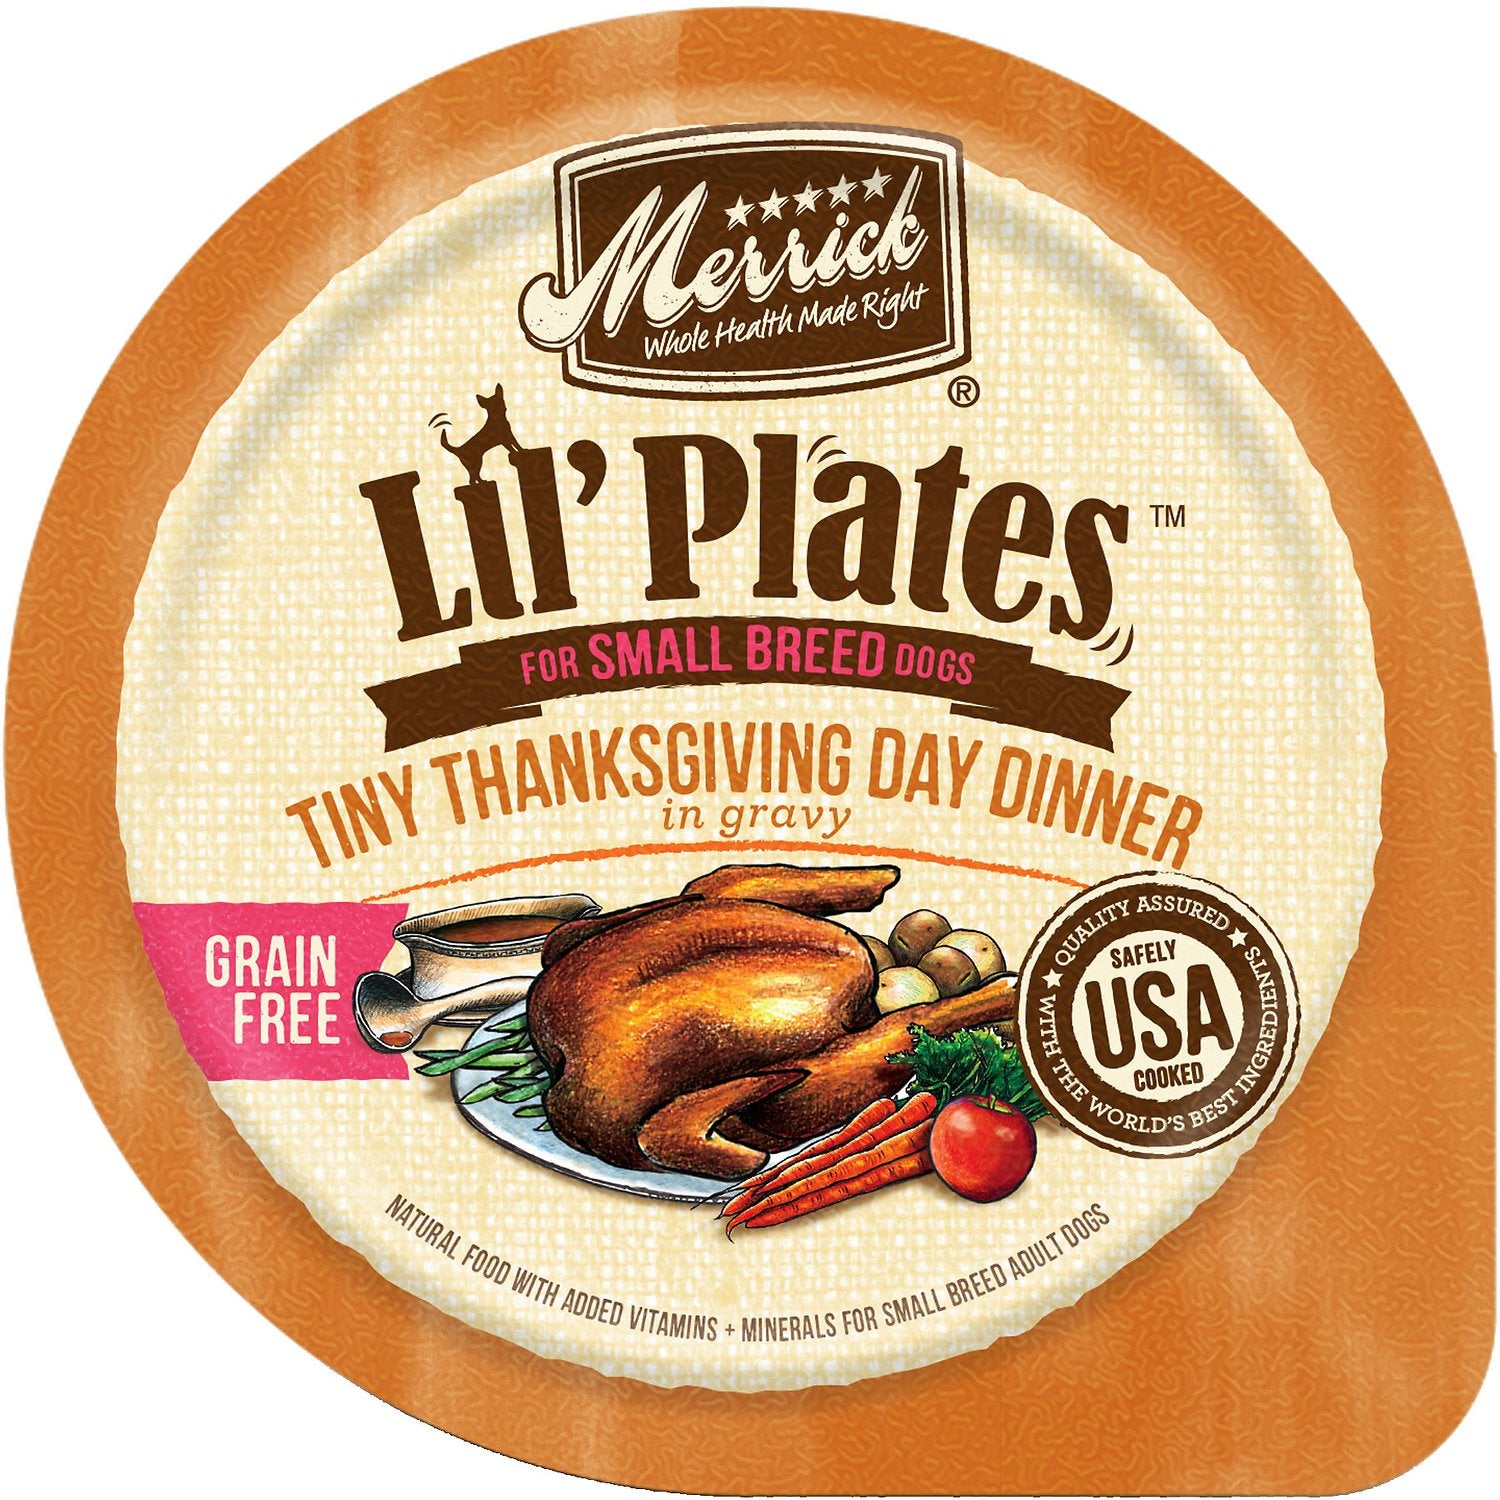 Merrick - Lil' Plates Grain Free Tiny Thanksgiving Day Dinner (Wet Dog Food)